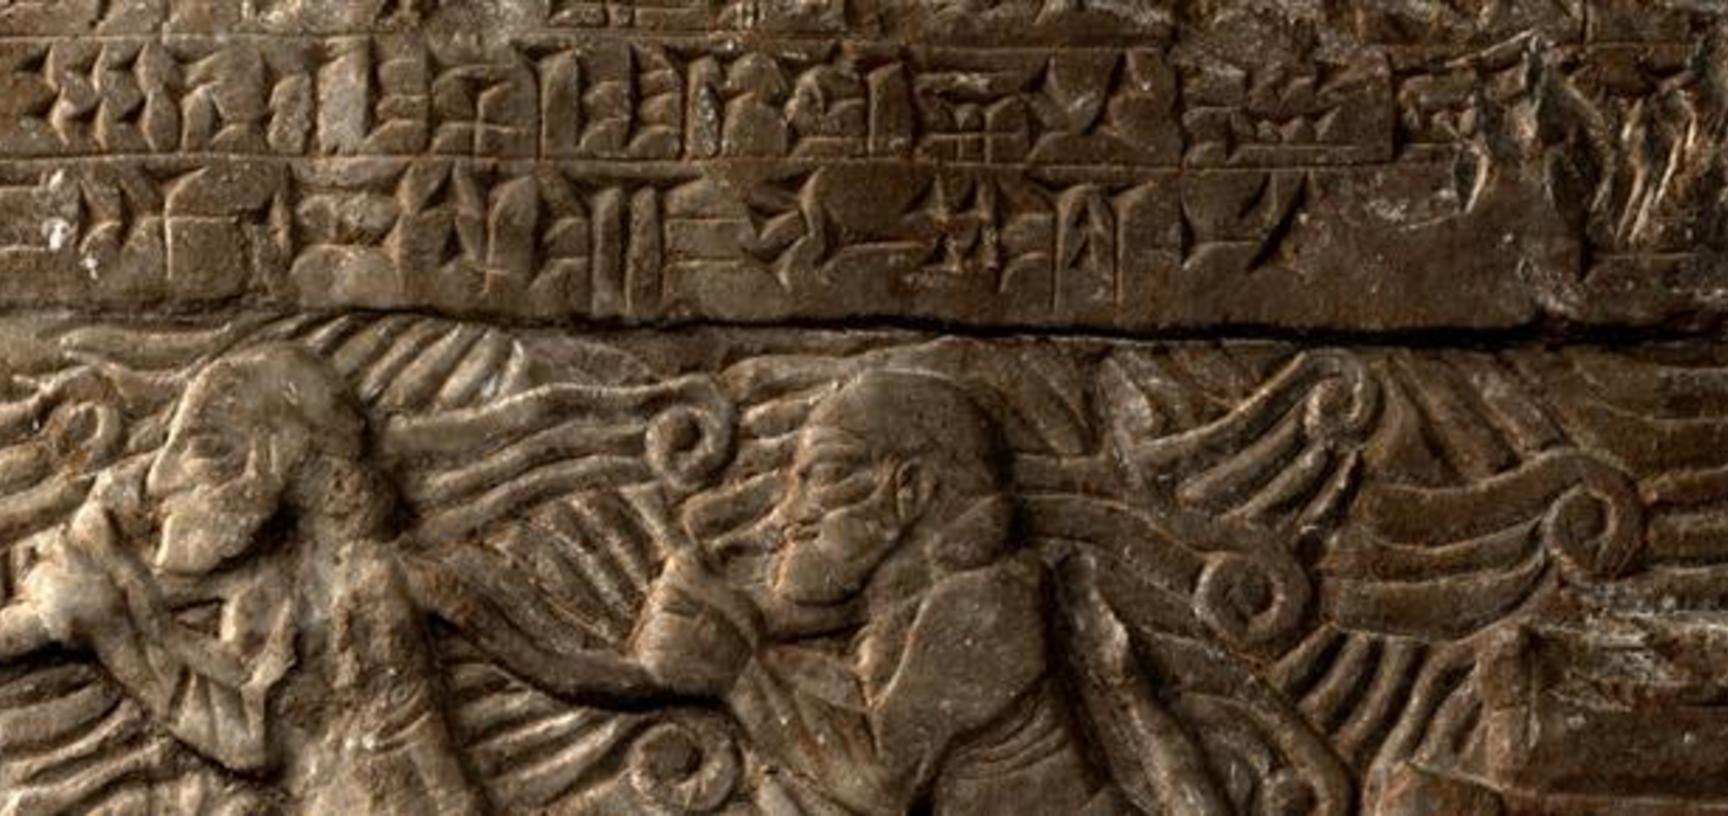 Cuneiform Digital Library | Digital Scholarship @Oxford